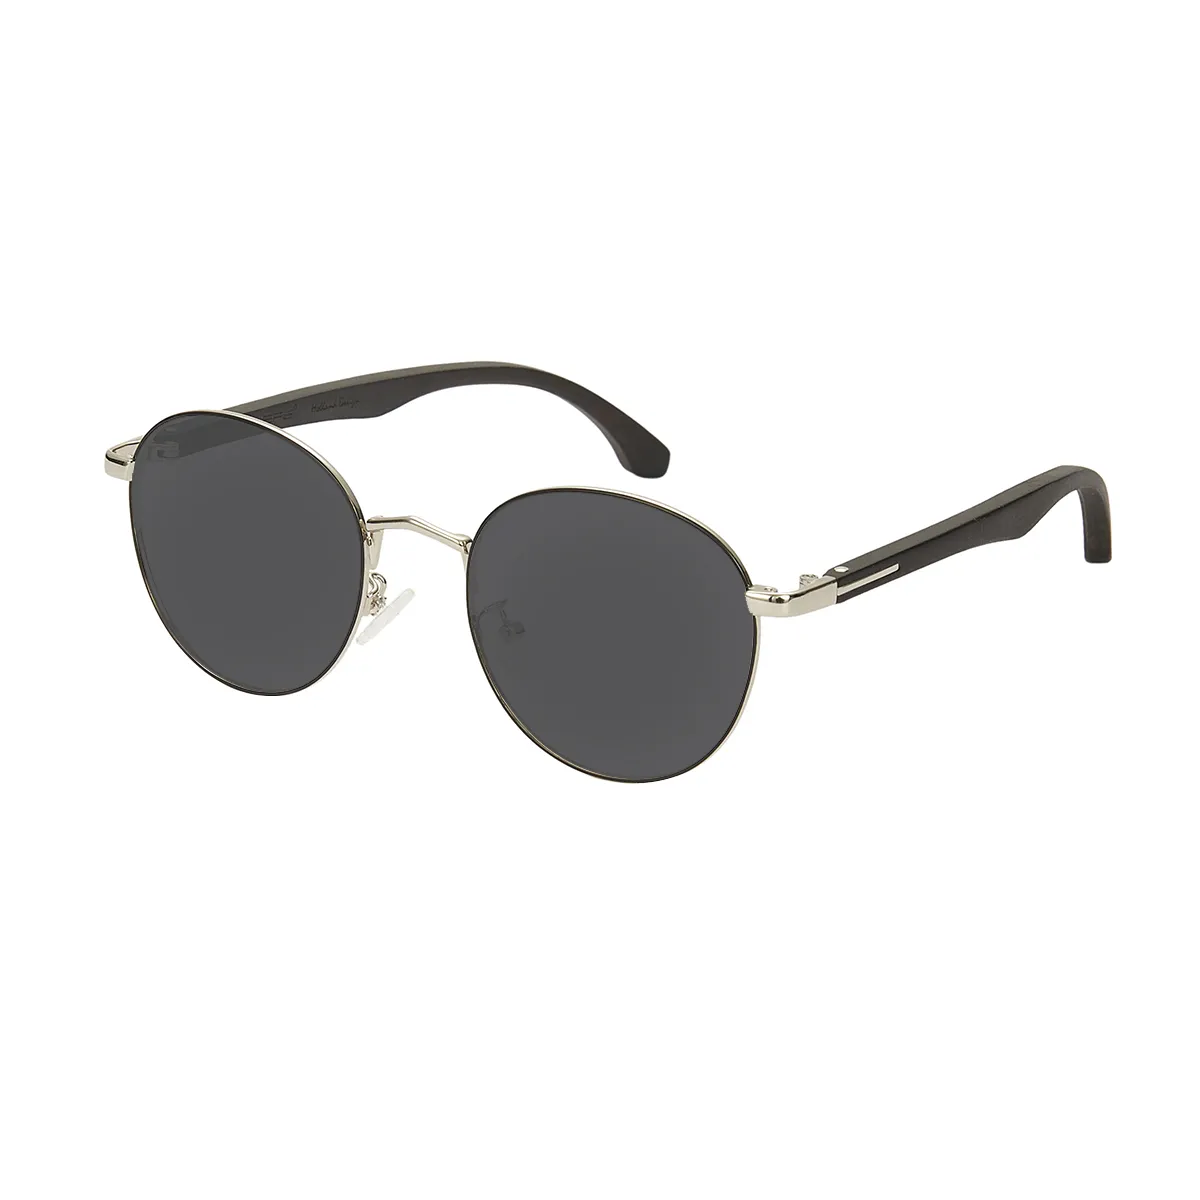 Harold - Round Black-Silver Sunglasses for Men